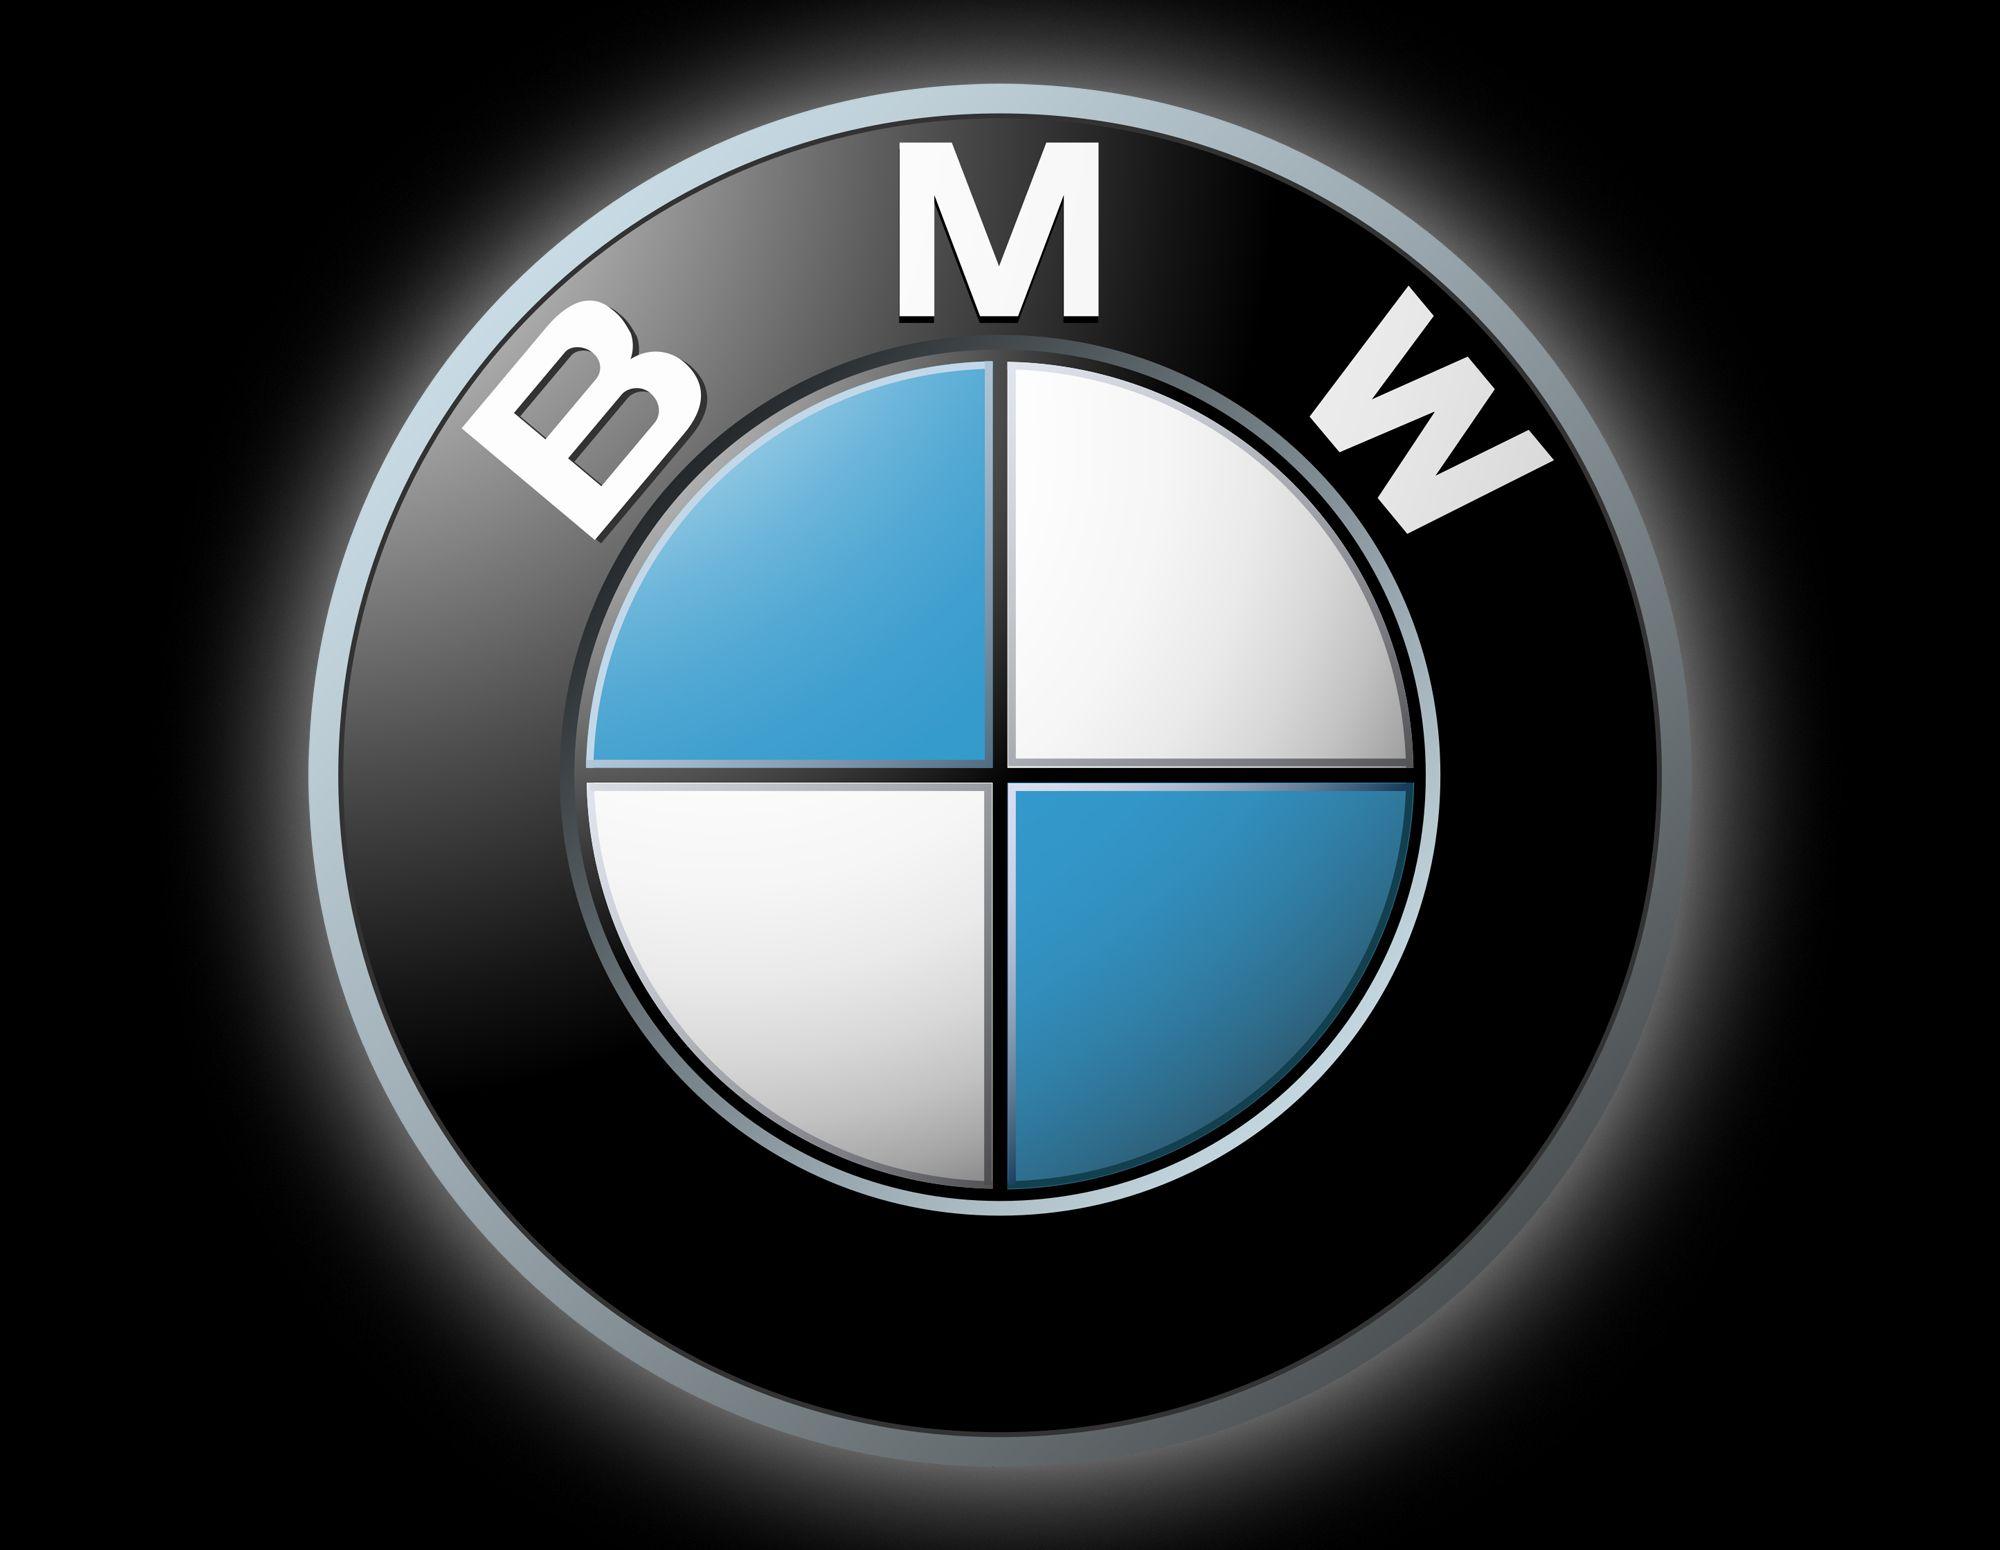 BMW Motorcycle Logo - BMW Logo. Motorcycle brands: logo, specs, history